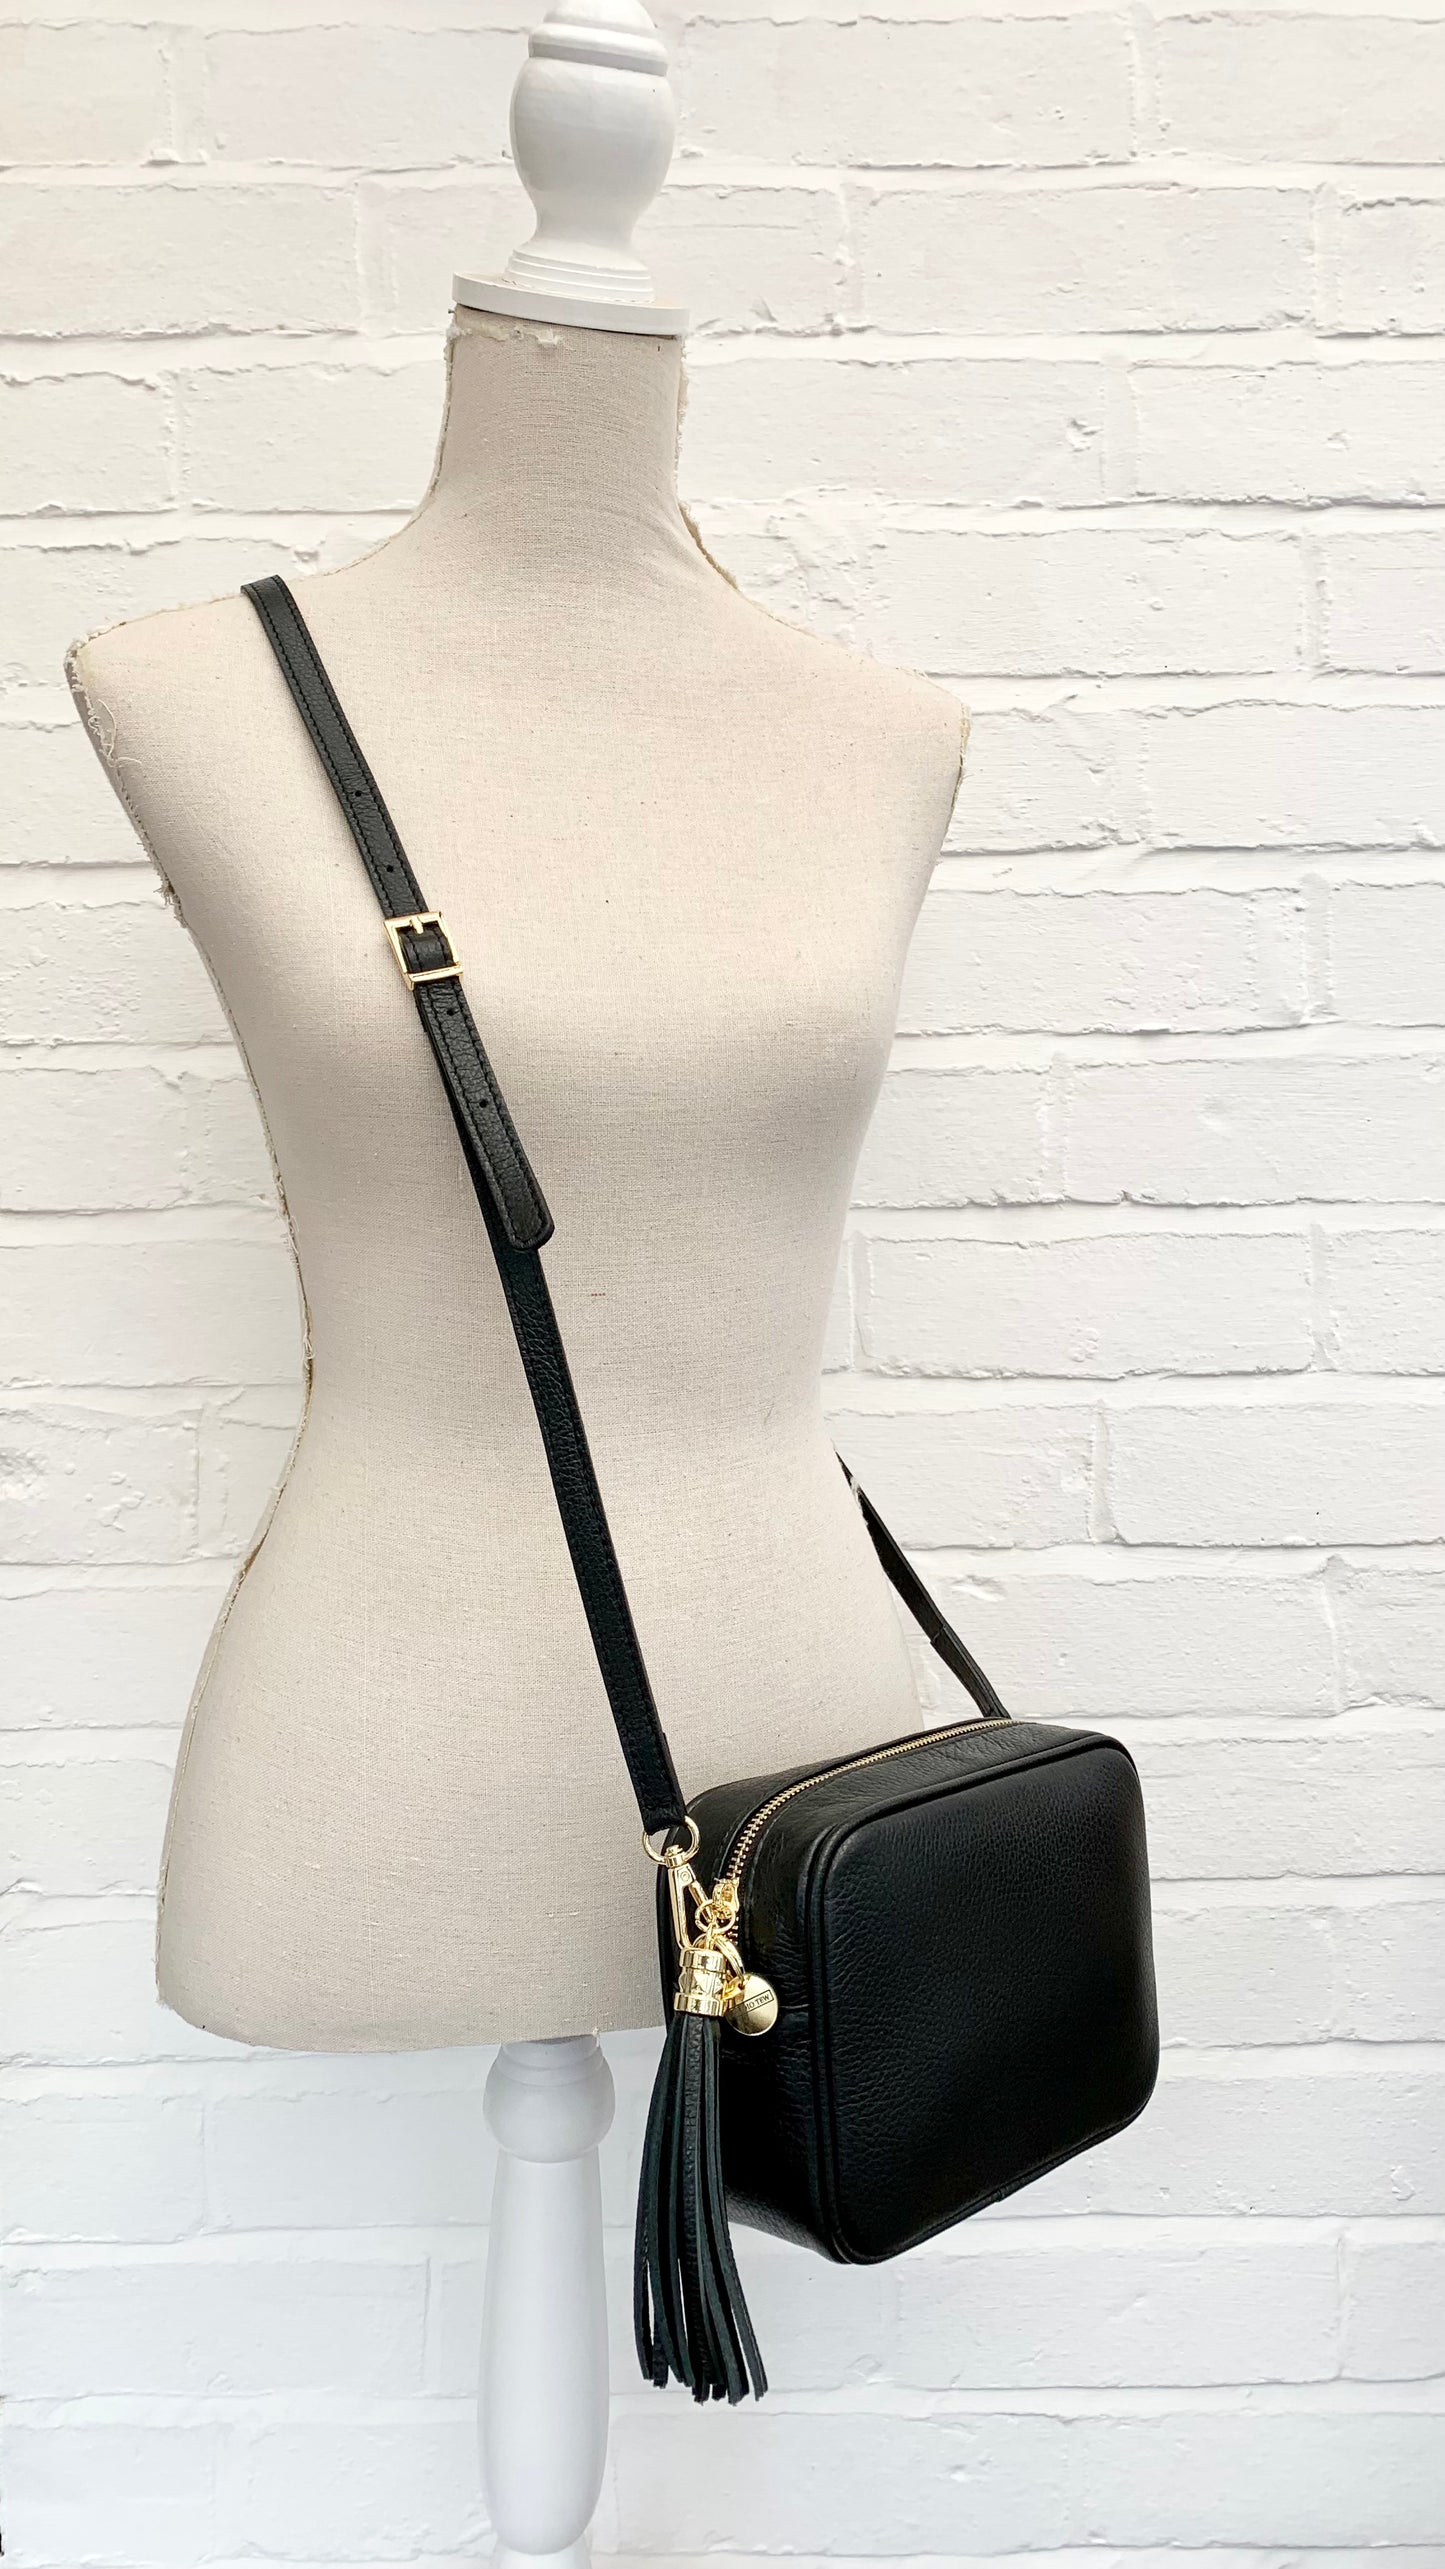 Black Leather Crossbody Bag With Tassel & Strap - Darcy